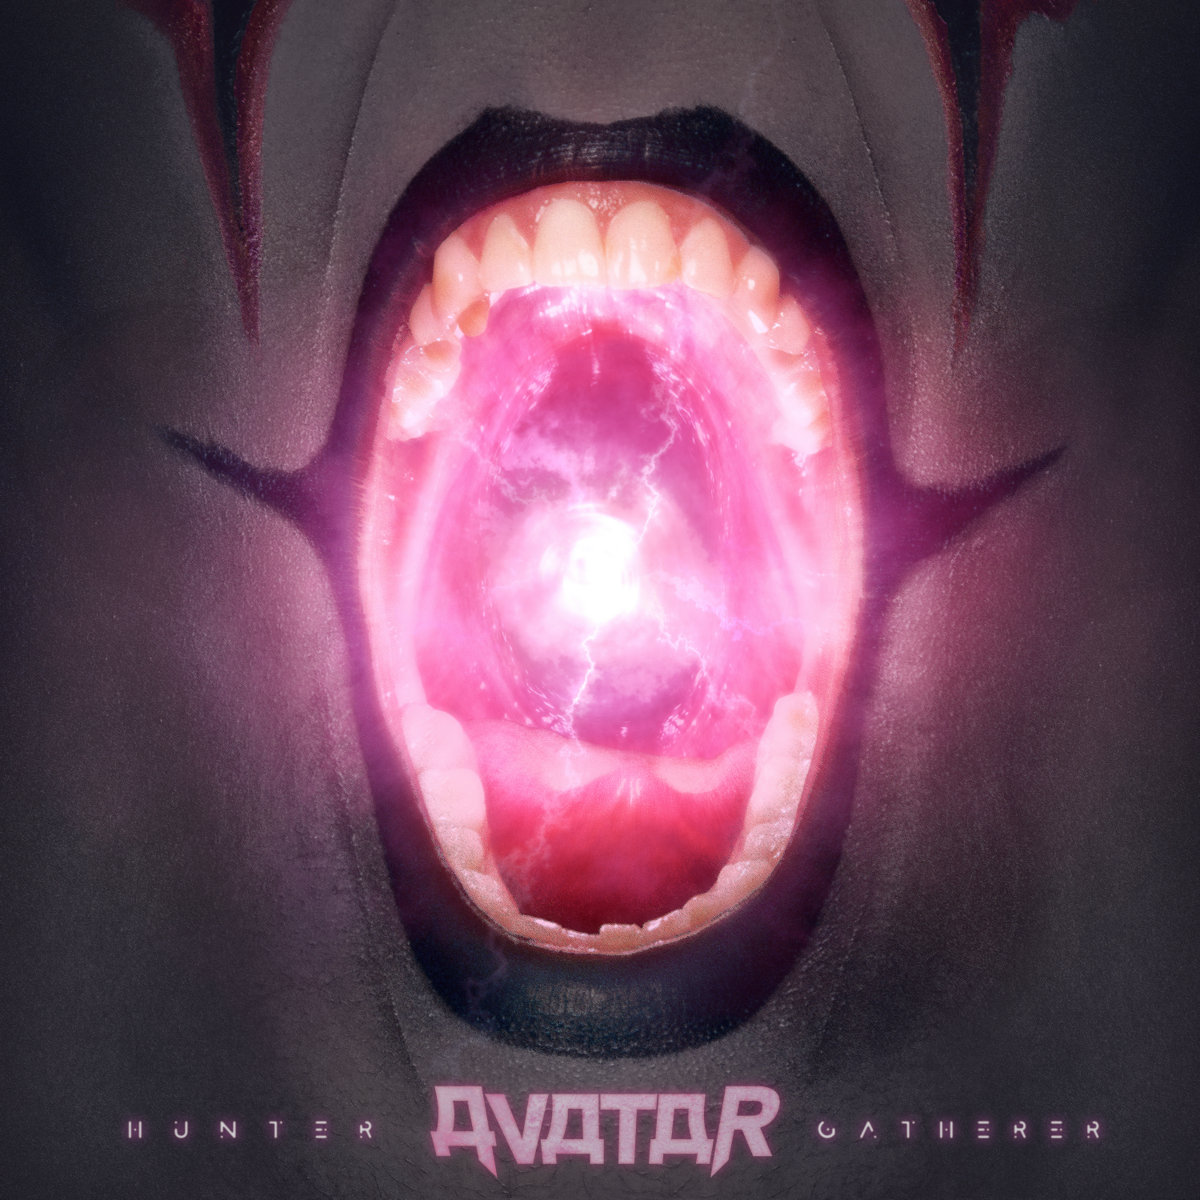 Avatar – Hunter Gatherer